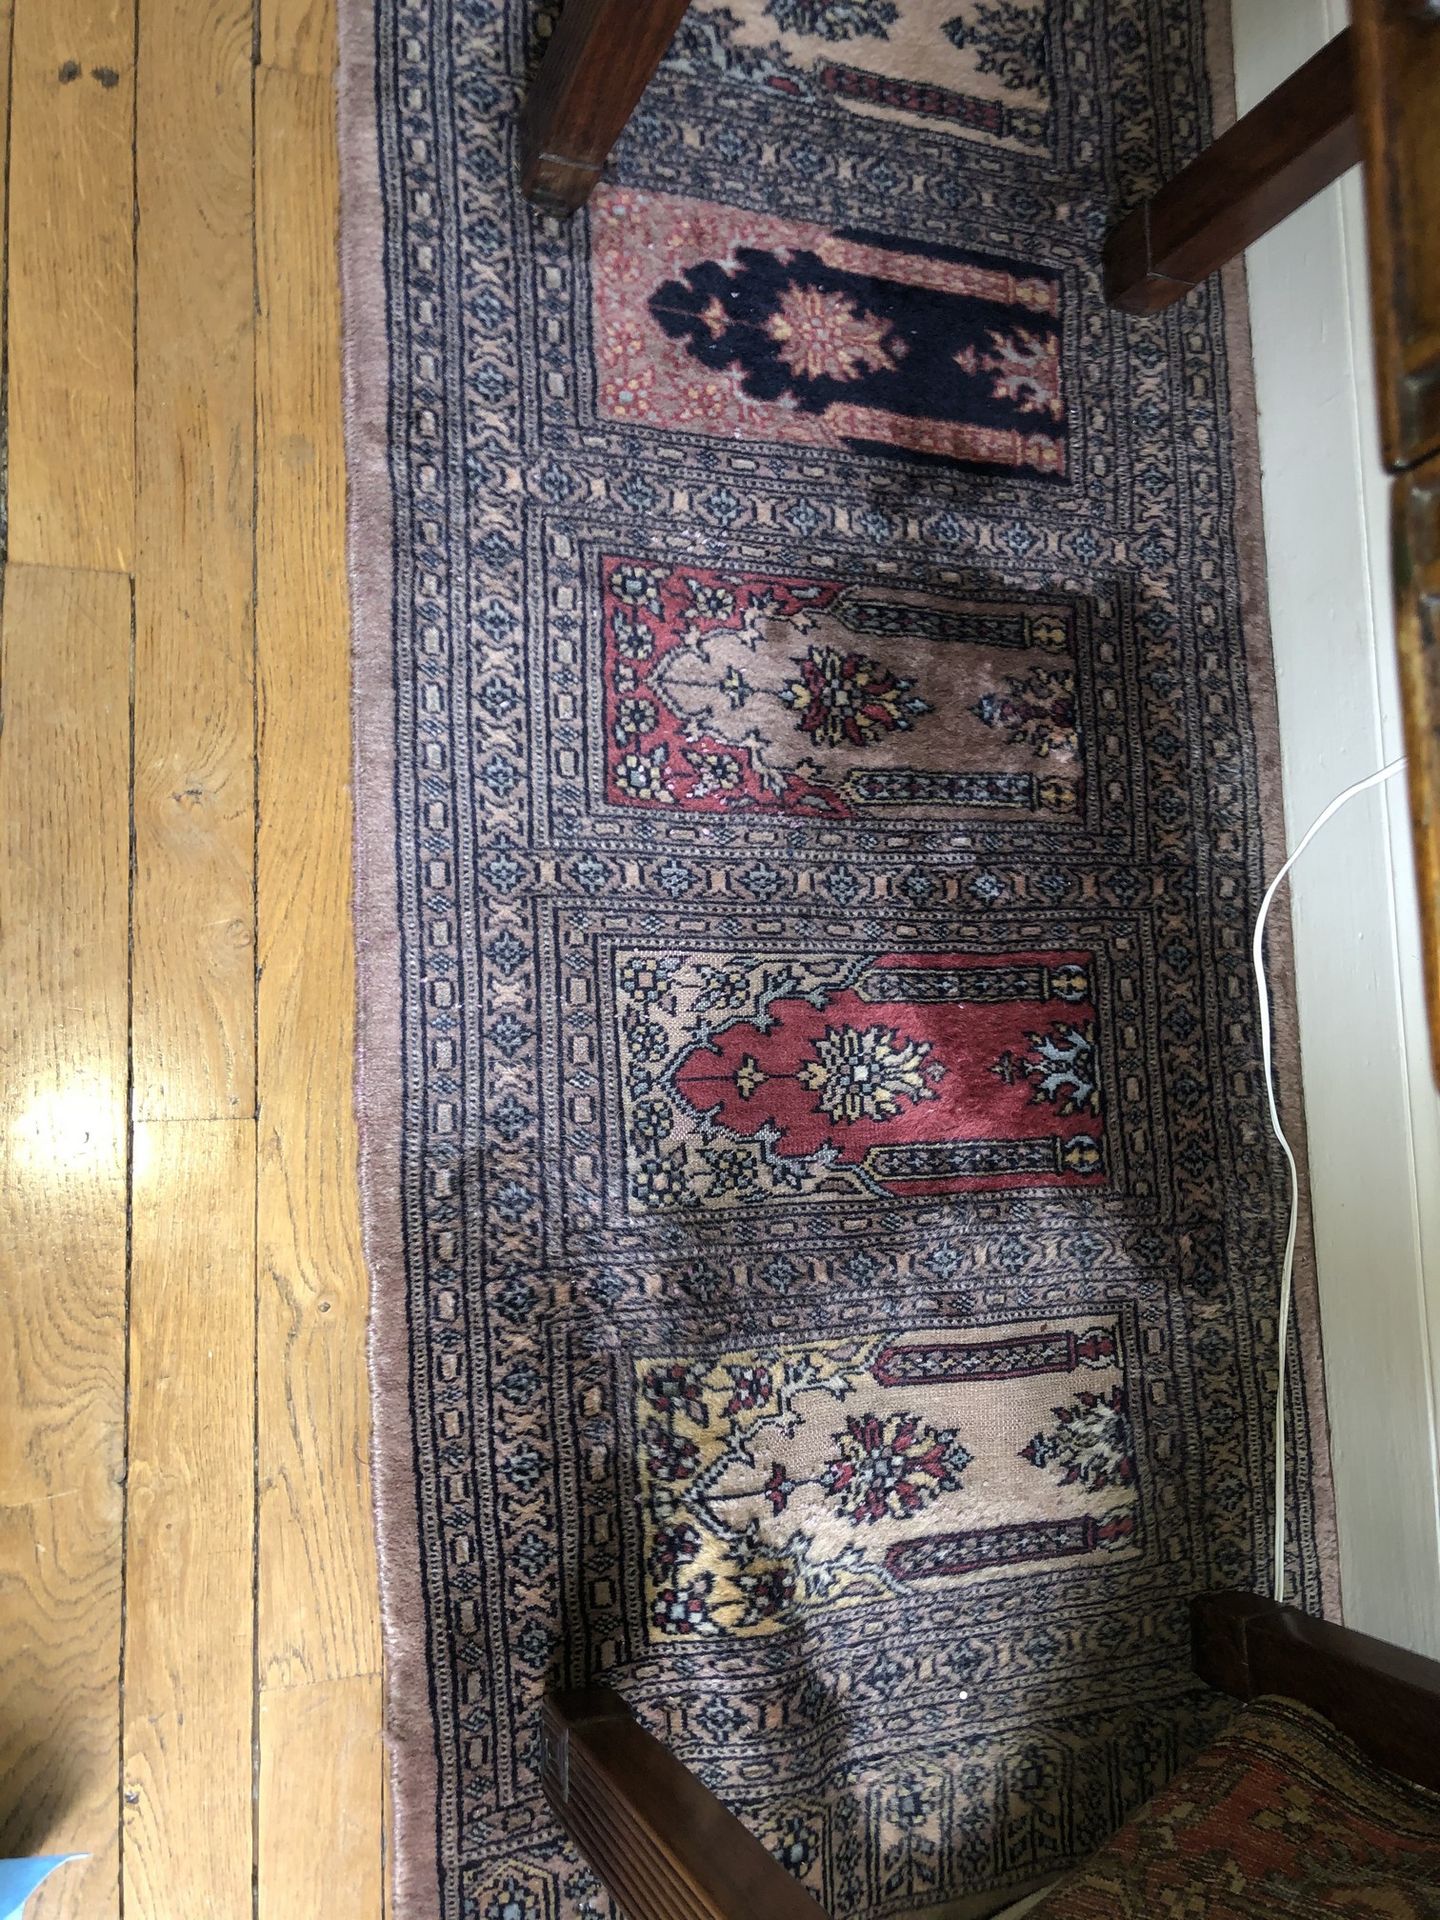 Null Carpet with six mirab motifs

Pakistan, 20th century

200 x 70 cm (approx.)